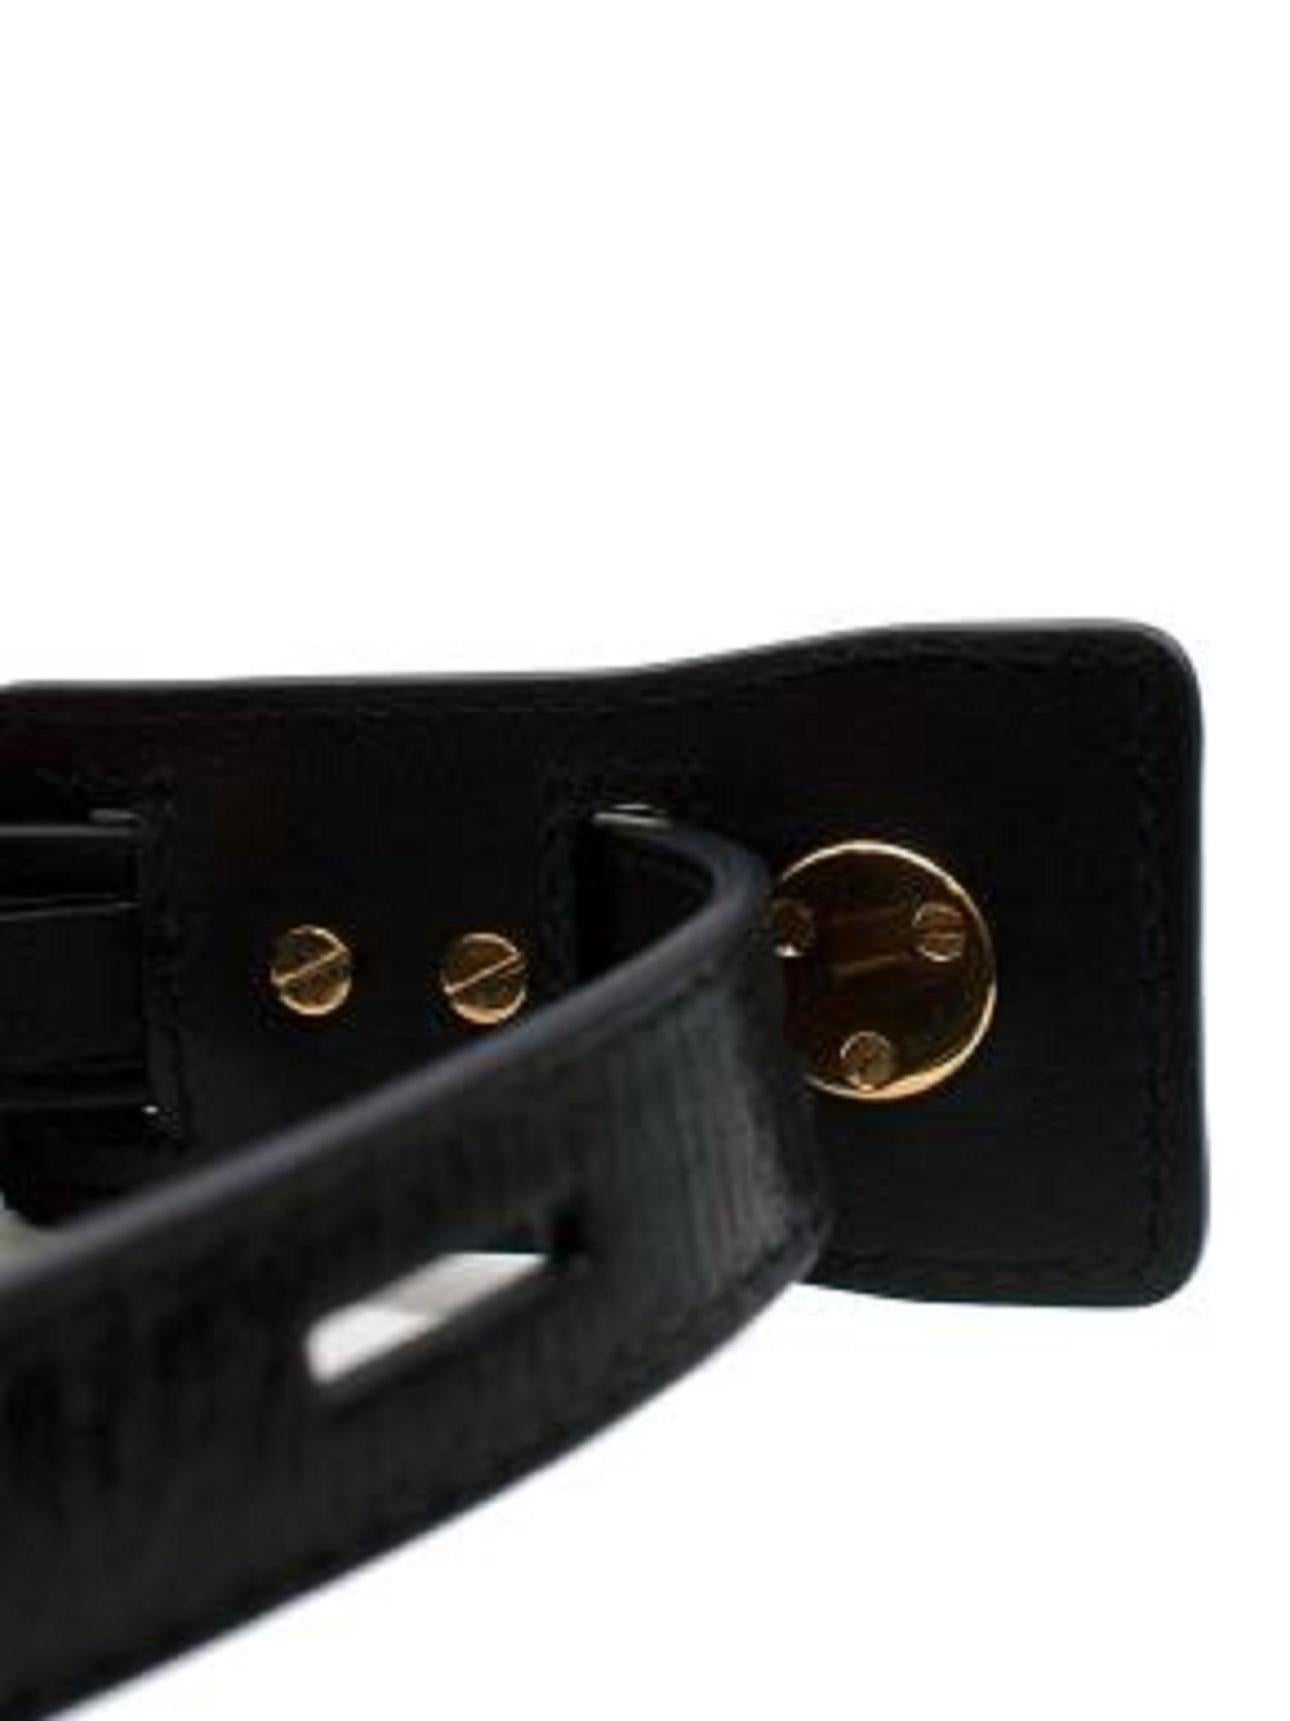 Women's Dior Black Leather Montaigne Belt - Size 70 For Sale